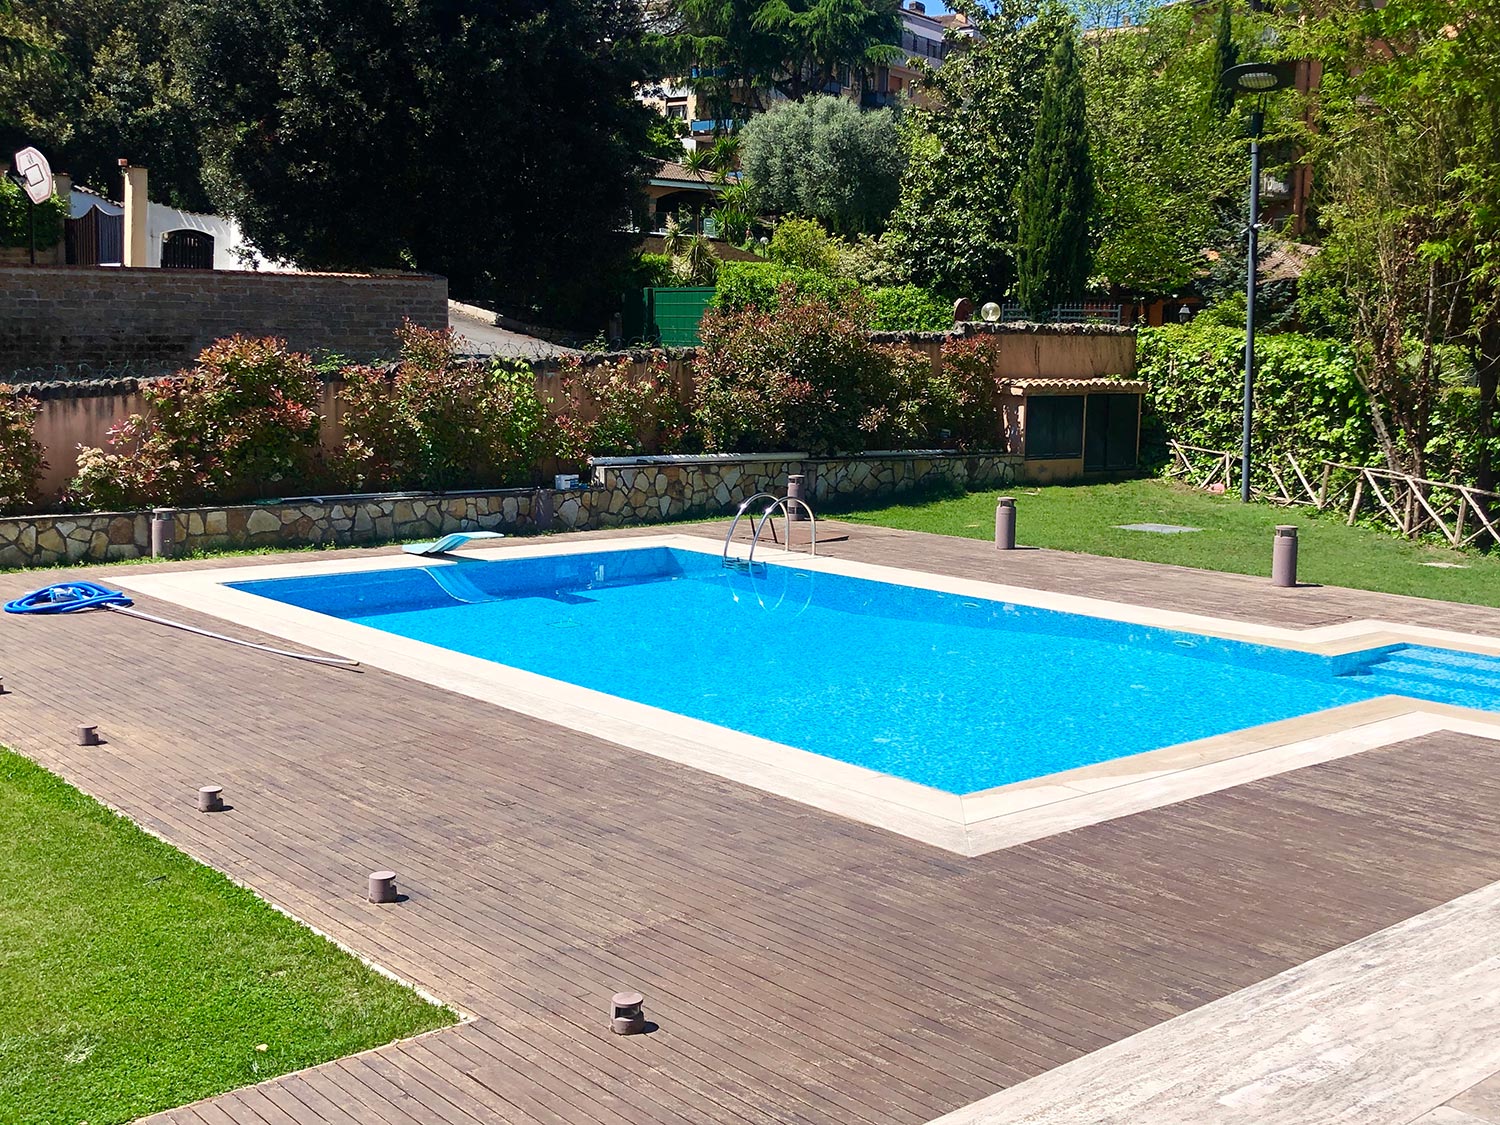 Swimming pool in home garden with wooden floor